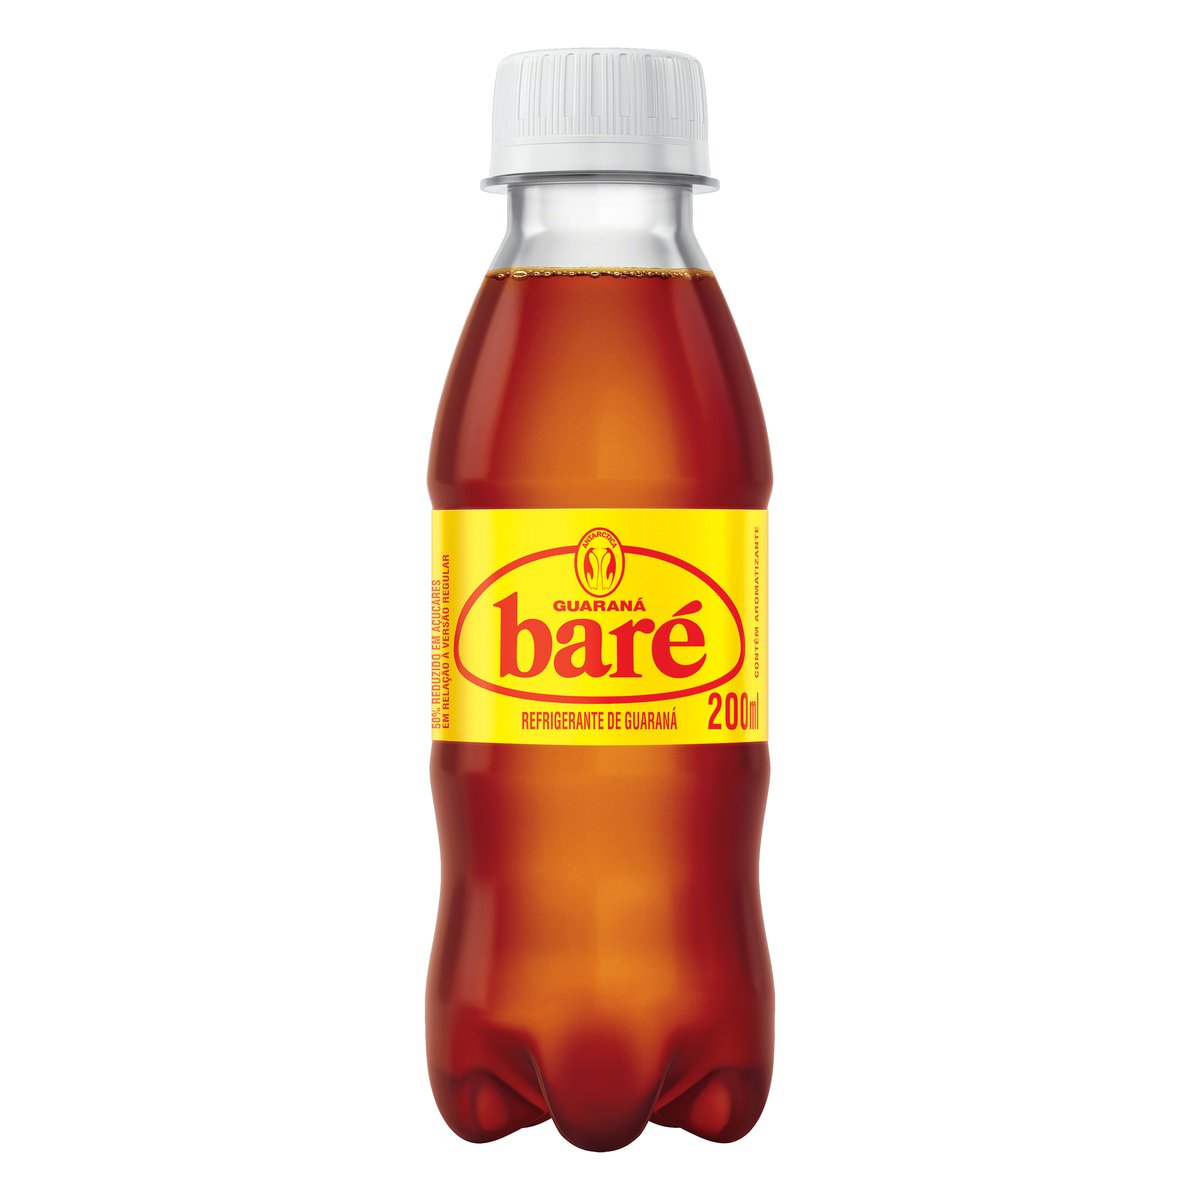 refrigerante-bare-guarana-garrafa-200-ml-1.jpg